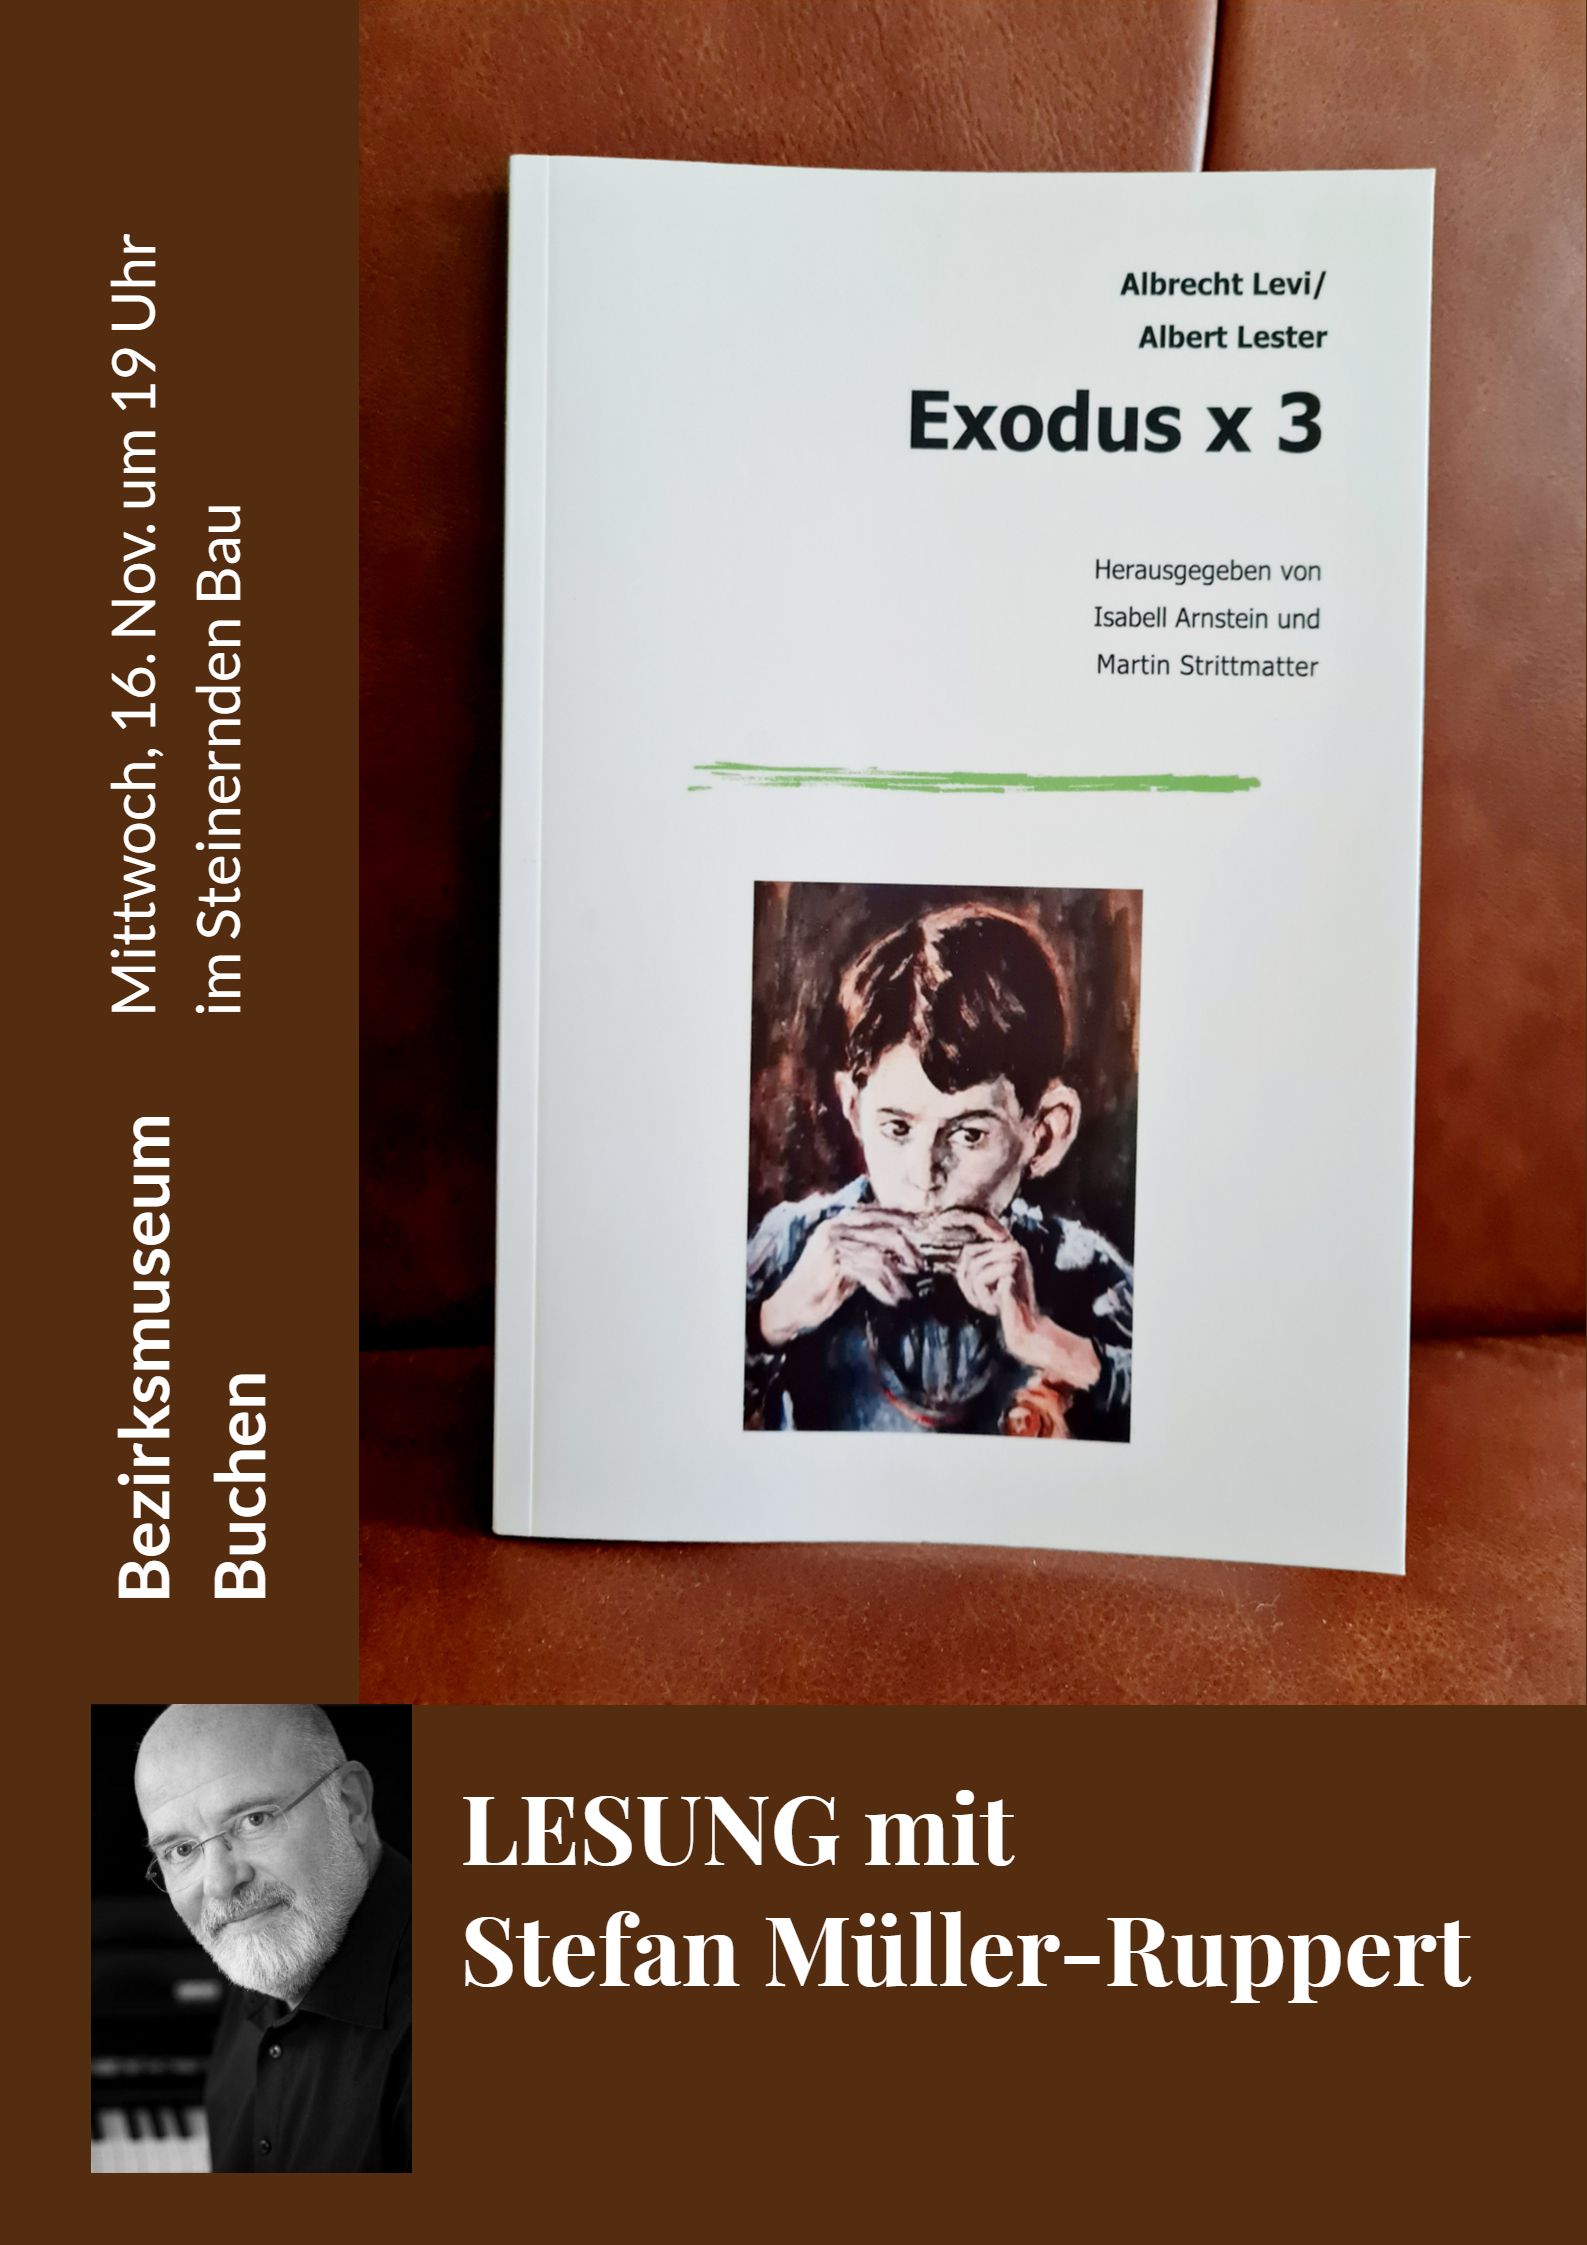 Lesung-Exodus-x-3_Plakat.jpg - 243,27 kB